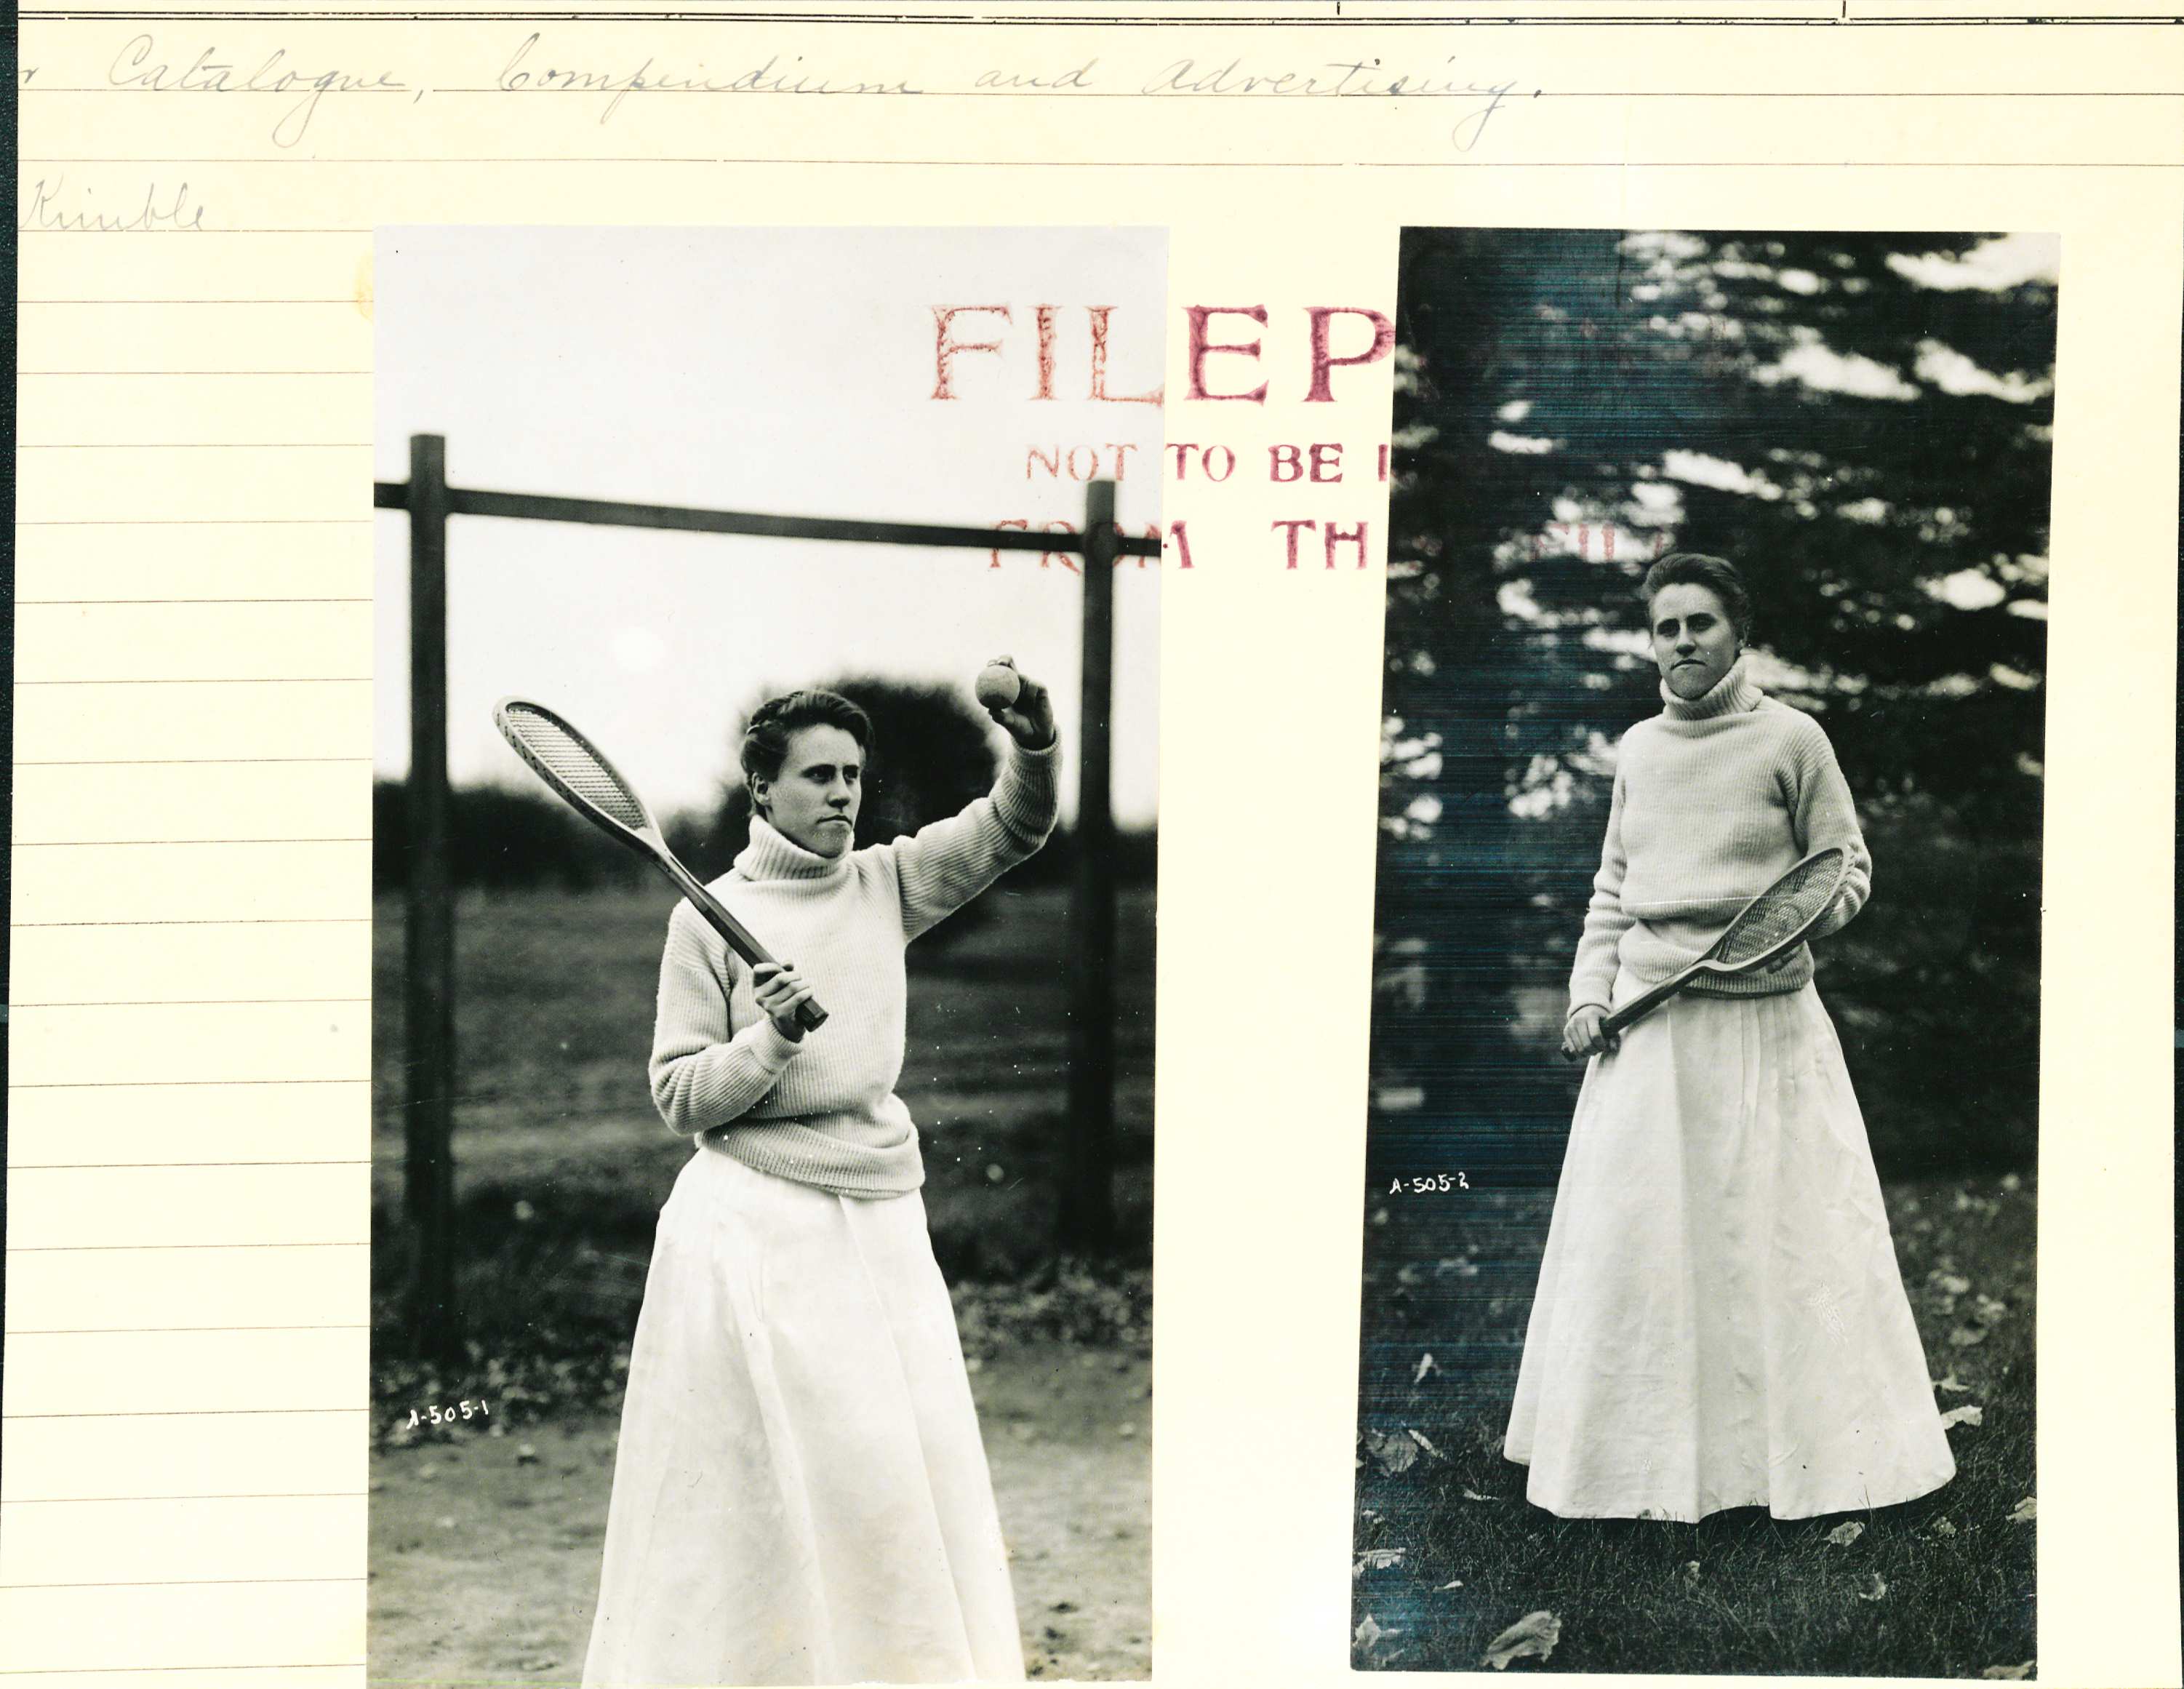 woman in long skirt playing tennis